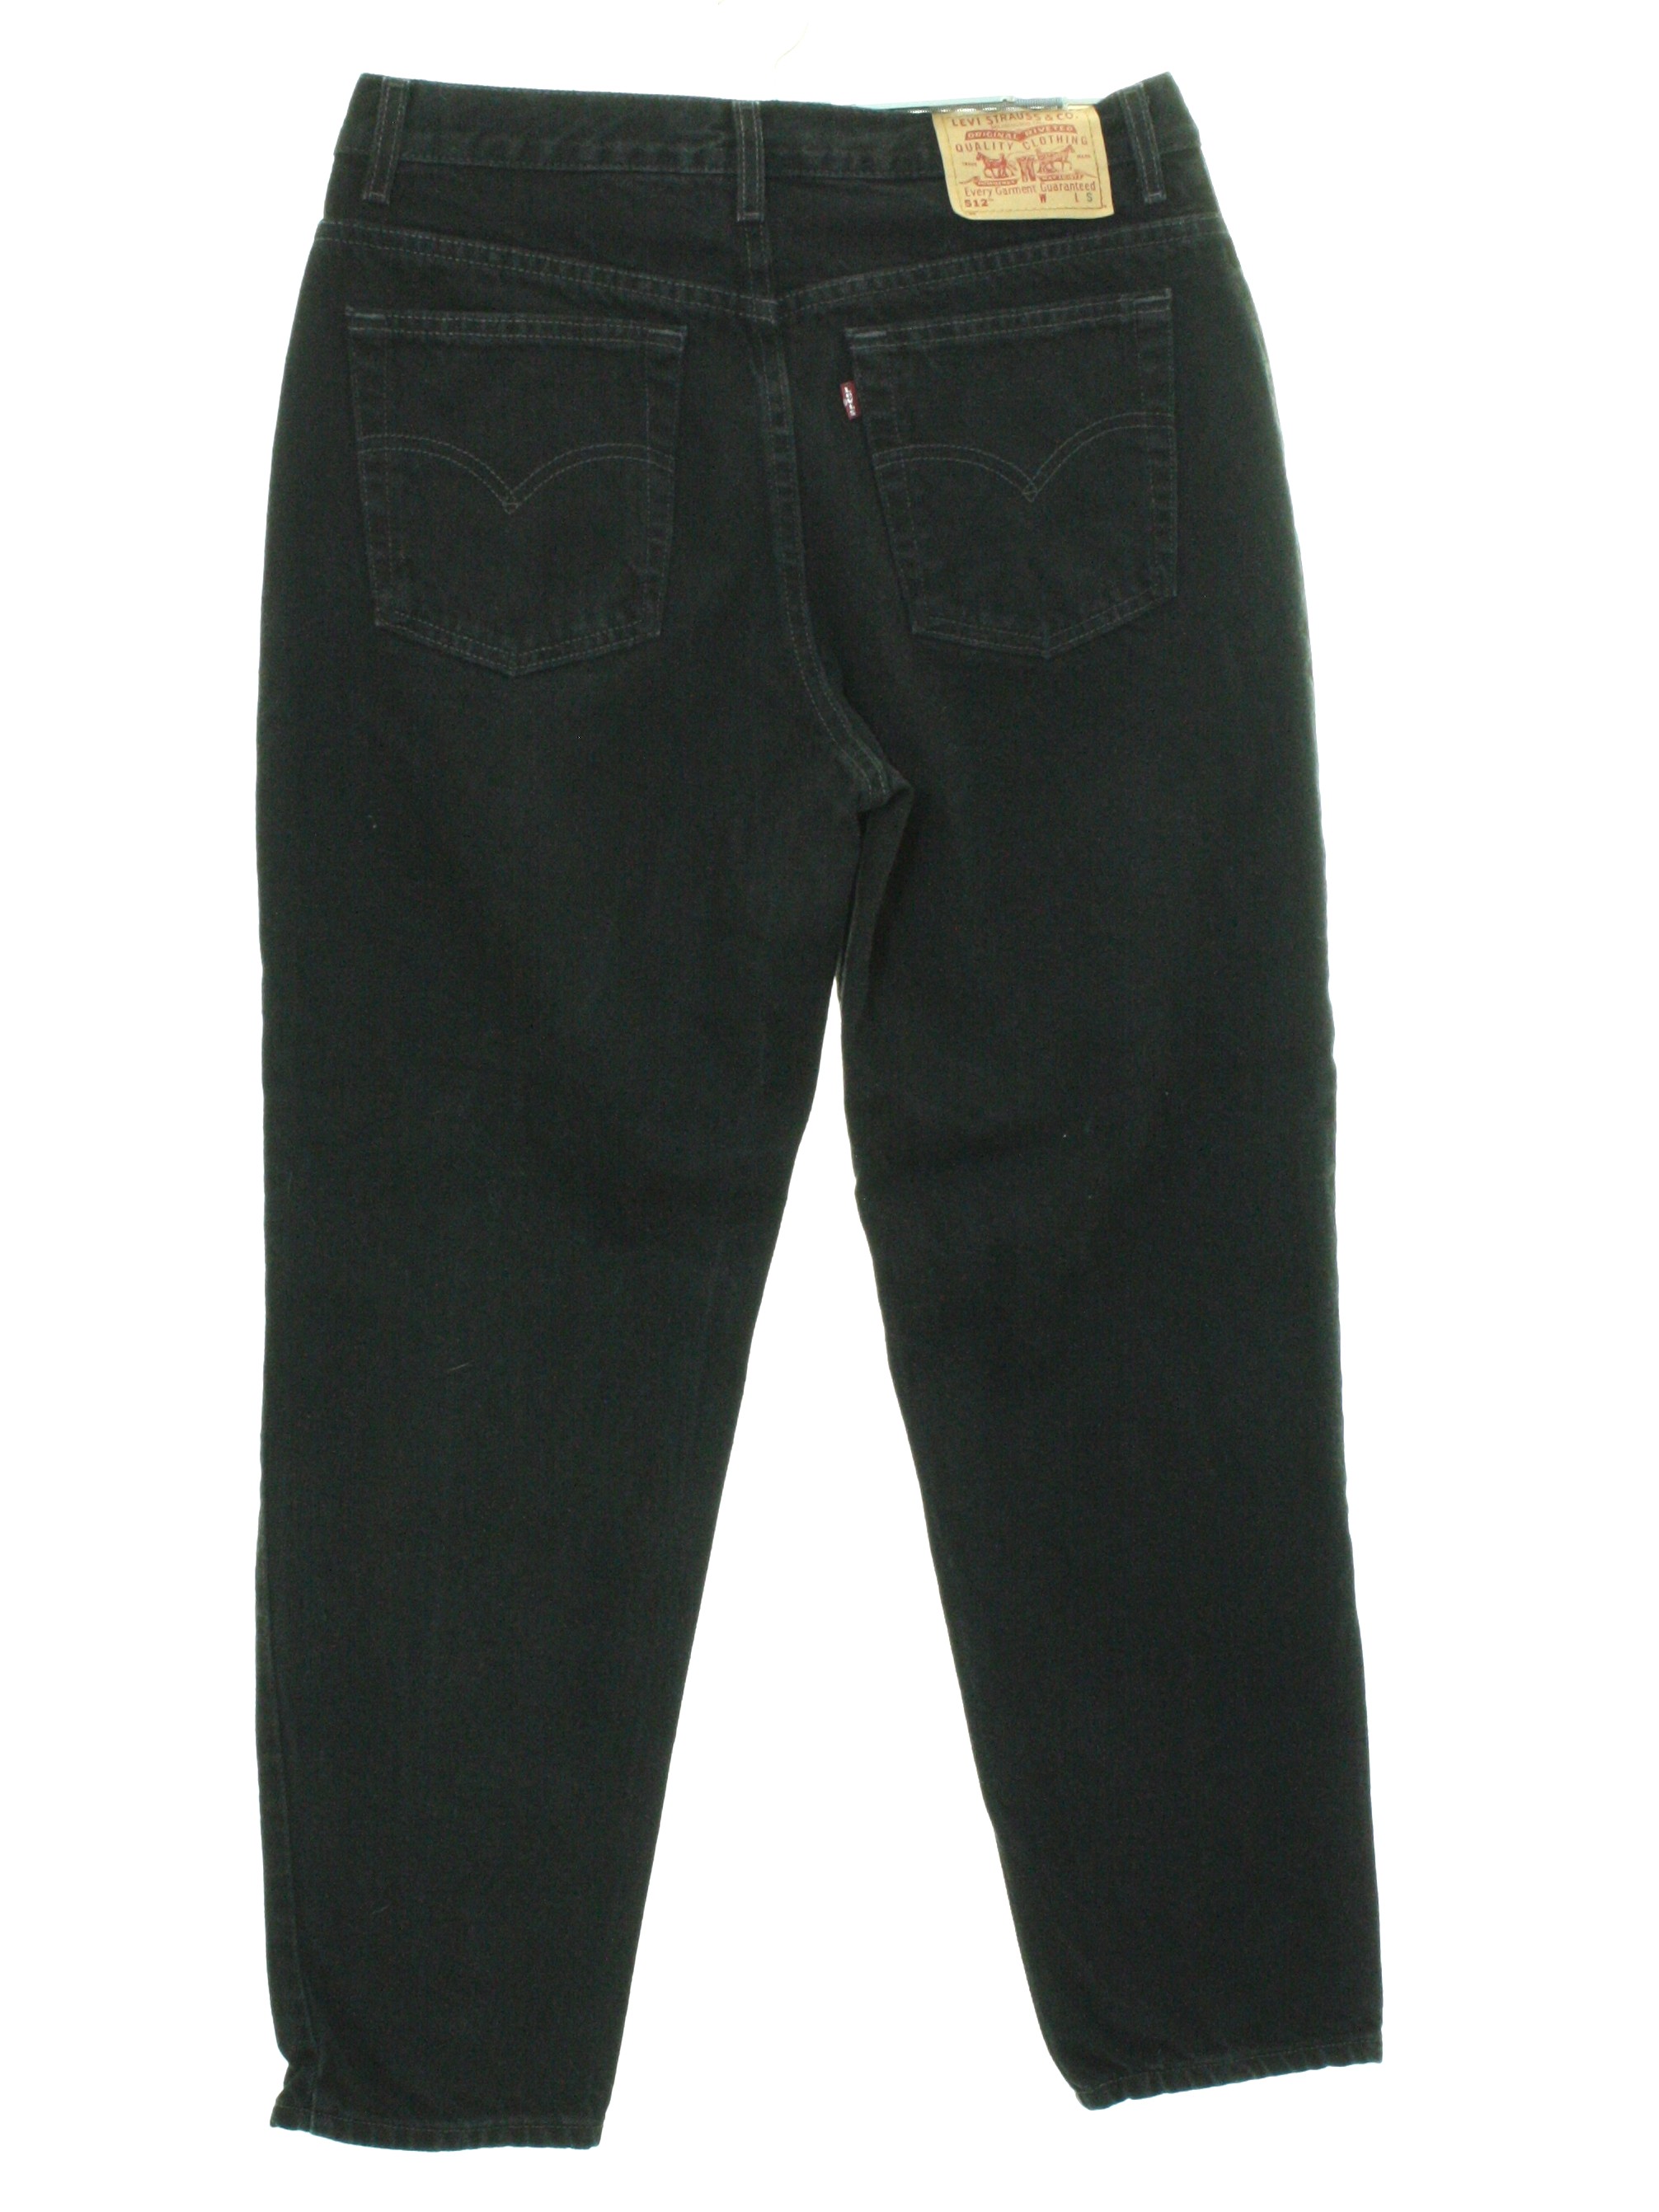 1990s Vintage Pants: 90s -Levis 512- Womens black cotton denim levis 512  slim fit straight leg high waisted denim jeans pants with zipper fly  closure with button. Five pocket style - front